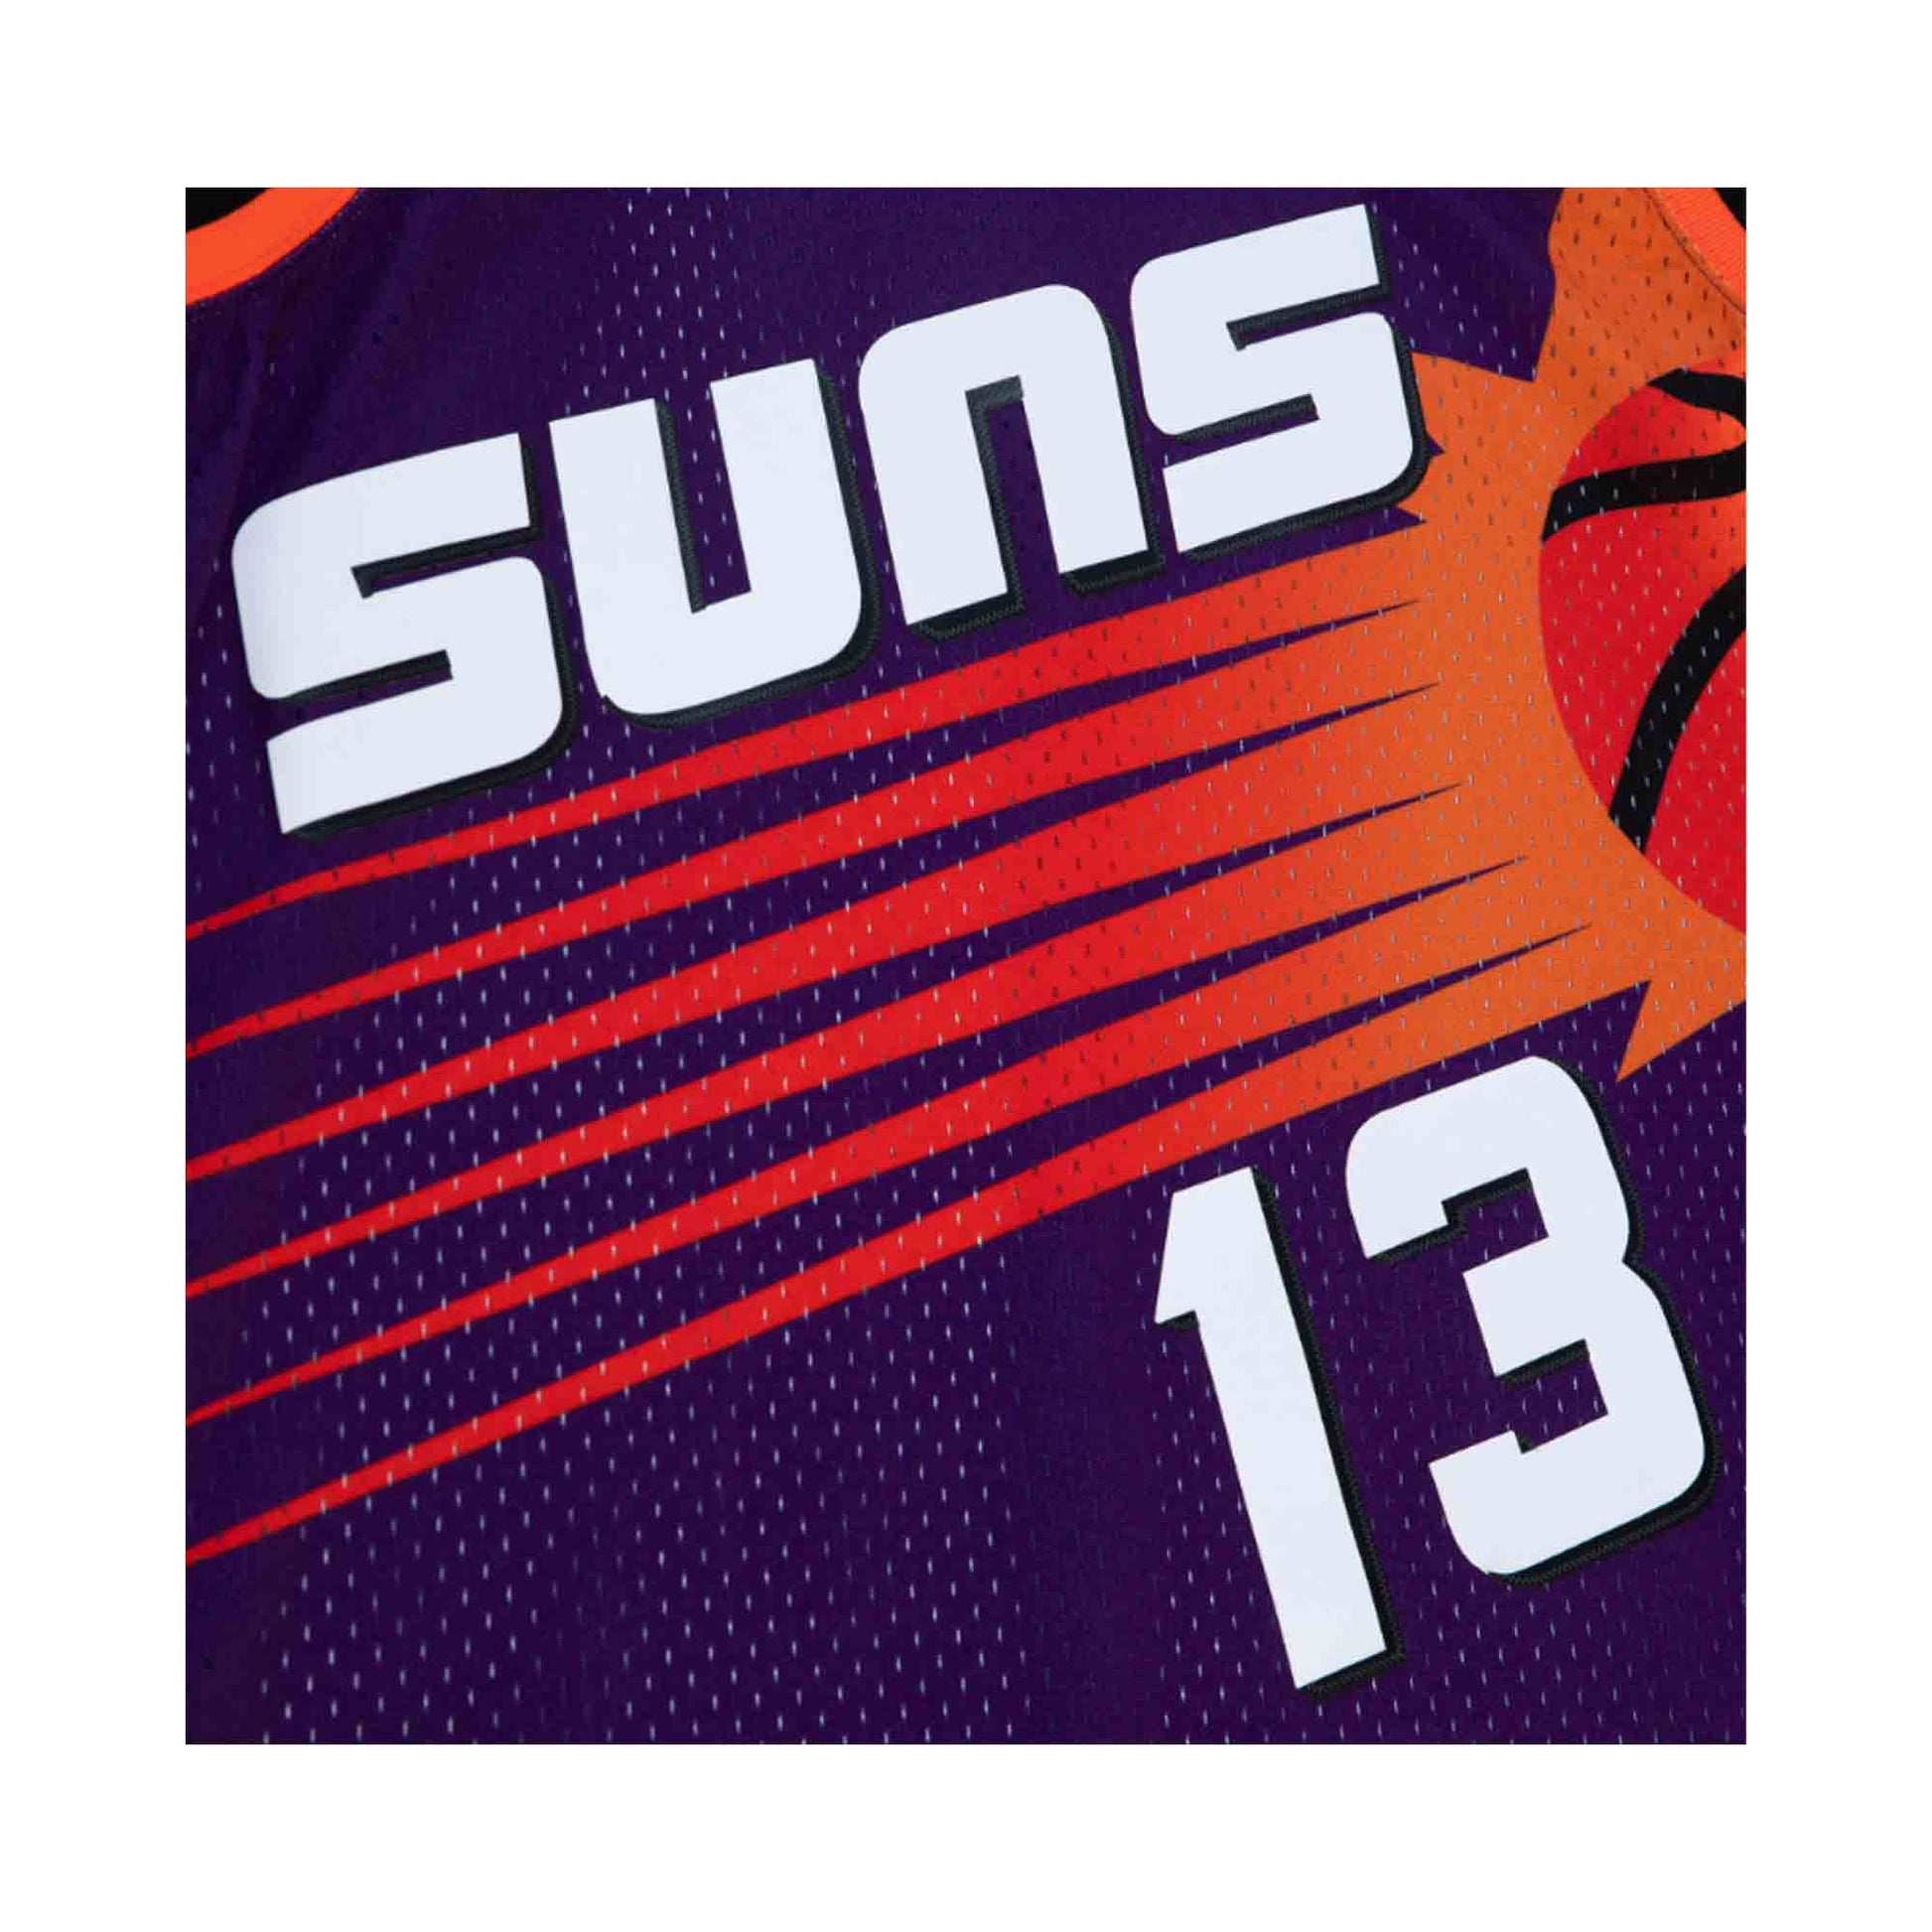 Wholesale N-B-a Retro Jerseys Phoenix Suns 13 Steve Nash Mitchell & Ness  Hwc Swingman Vest Top - China Phoenix Suns 13 Steve Nash Jerseys and  Mitchell & Ness Player Jerseys price